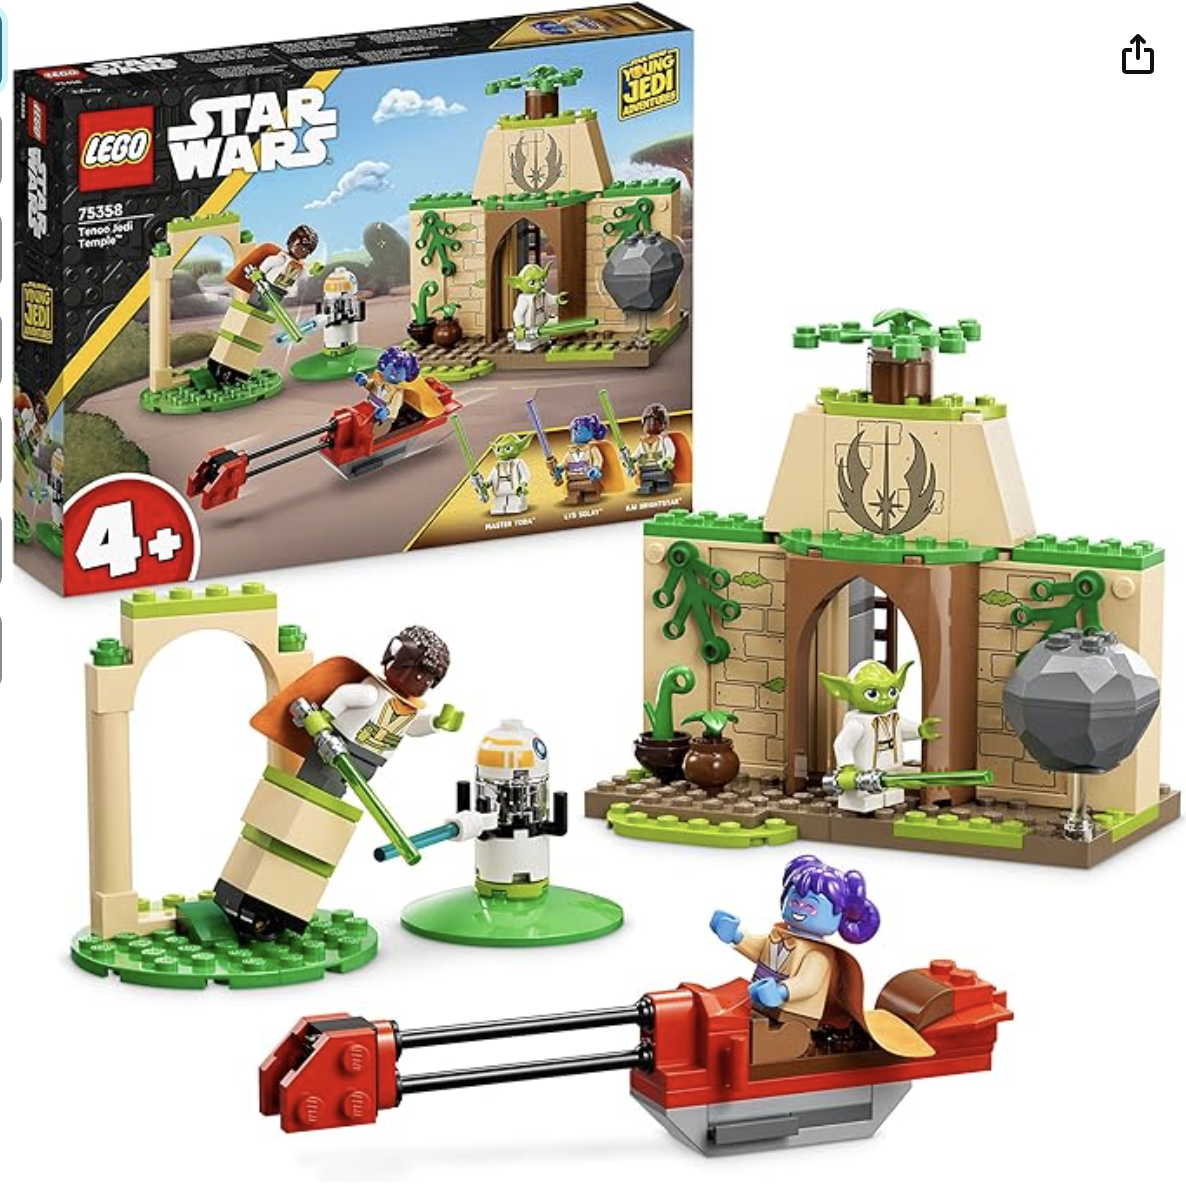 LEGO Star Wars Tenoo Jedi Temple bei Amazon